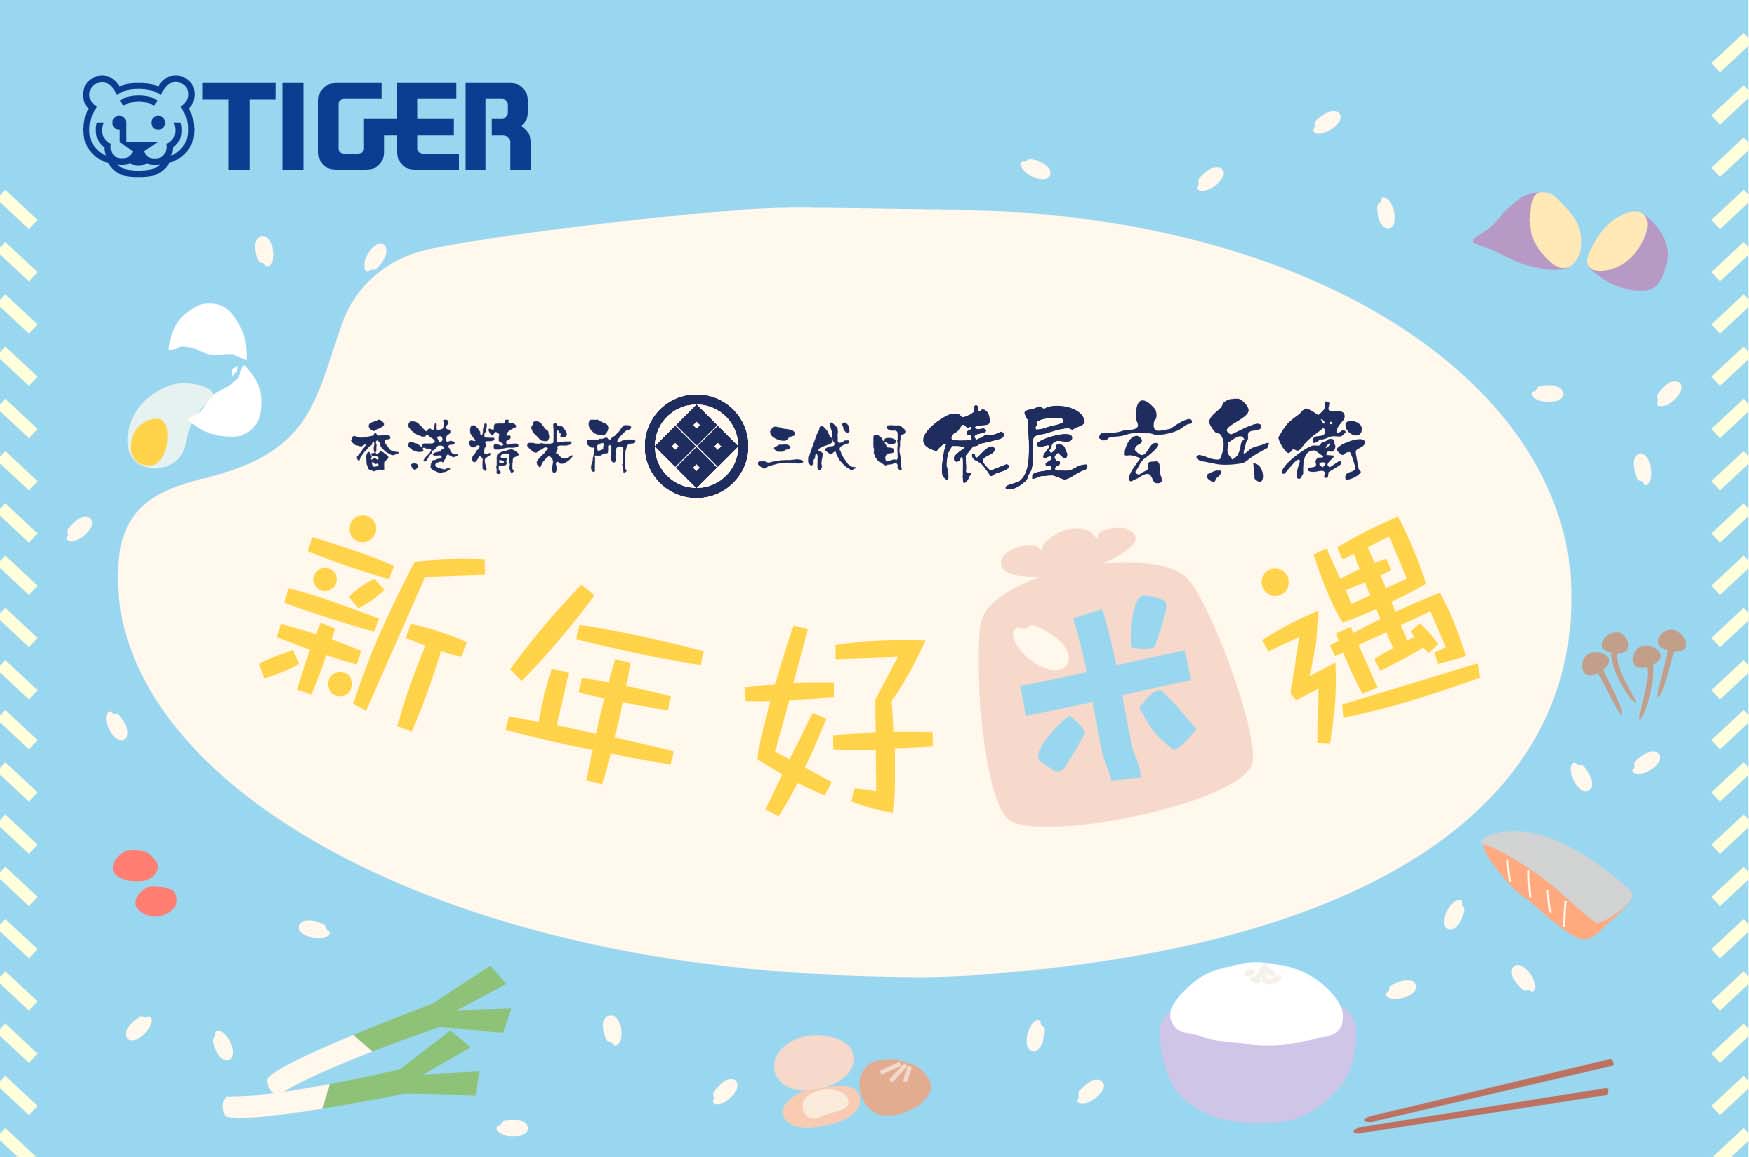 tiger-cny-japanese-rice-promotion-2018.jpg (119 KB)